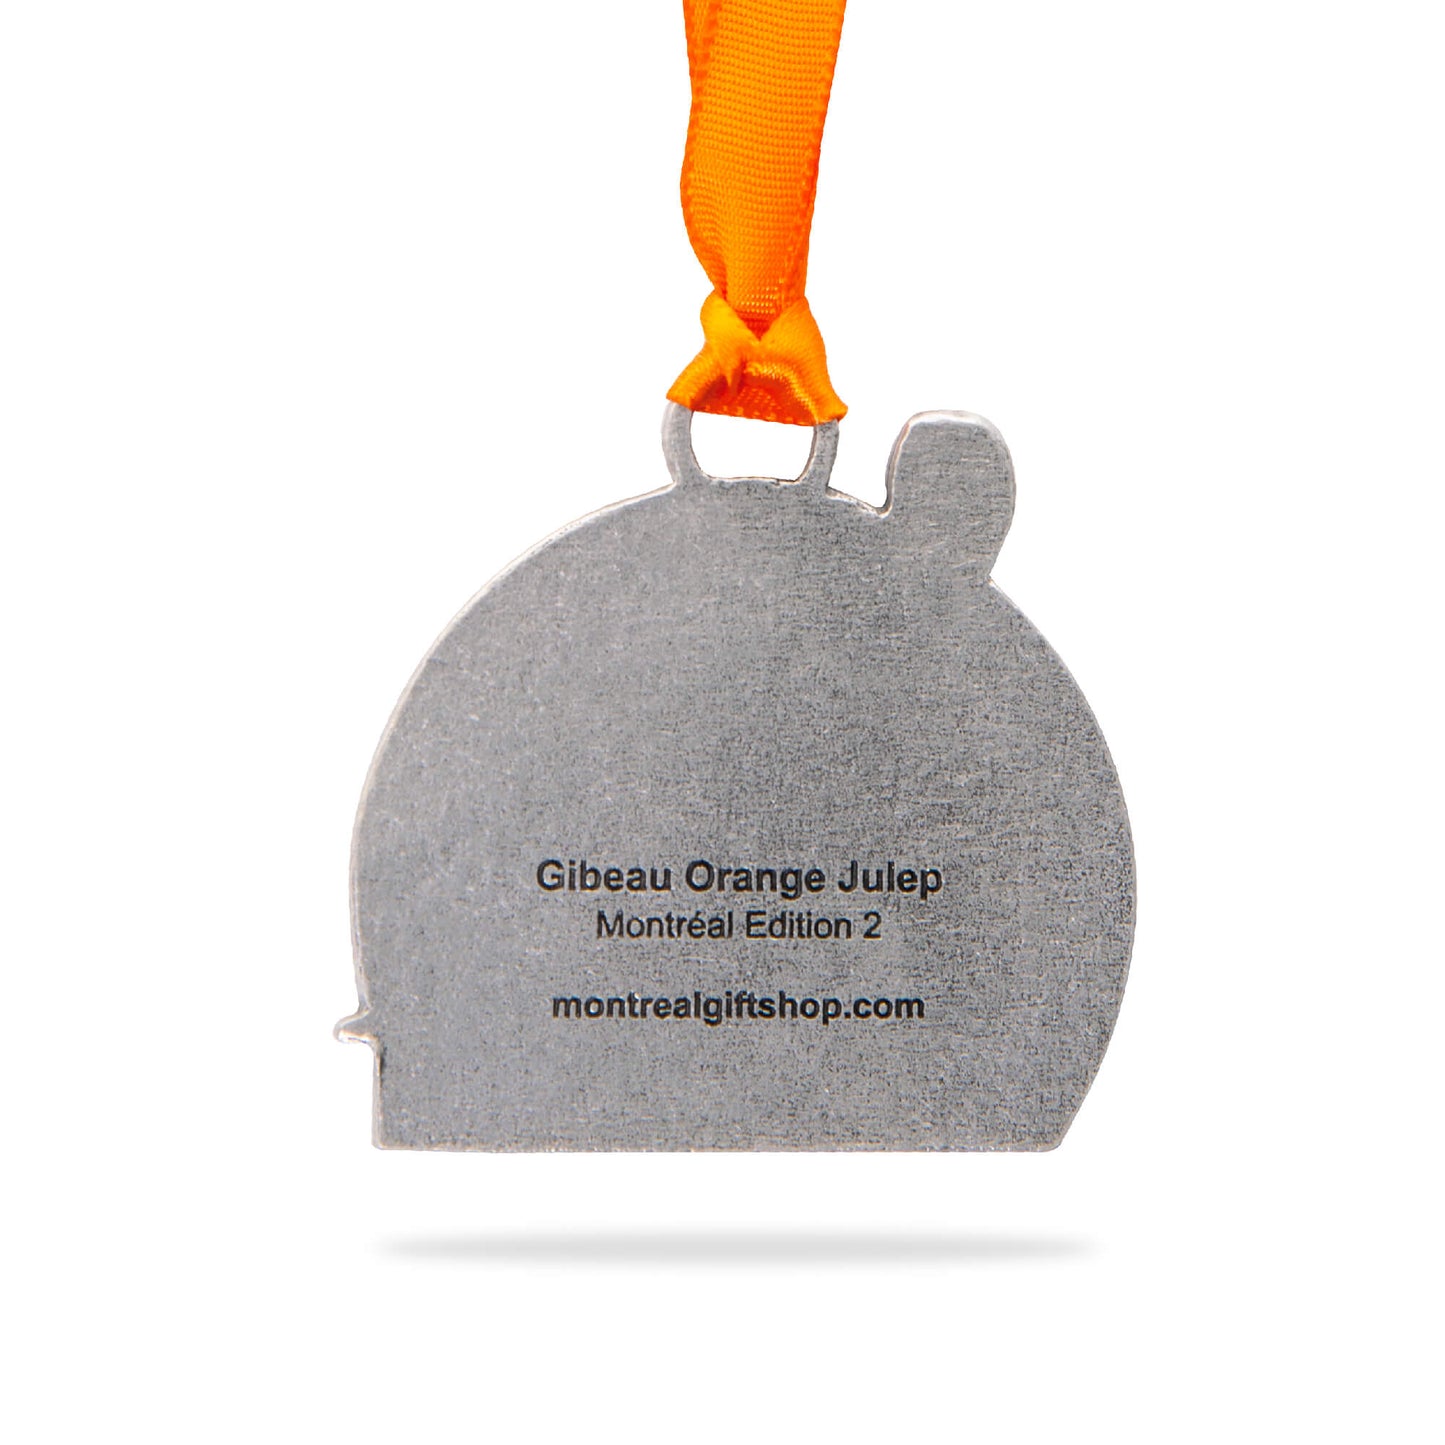 gibeau orange julep, montreal, edition 2, icon, heritage, gift, souvenir, iconic, orange ribbon, christmas tree ornament